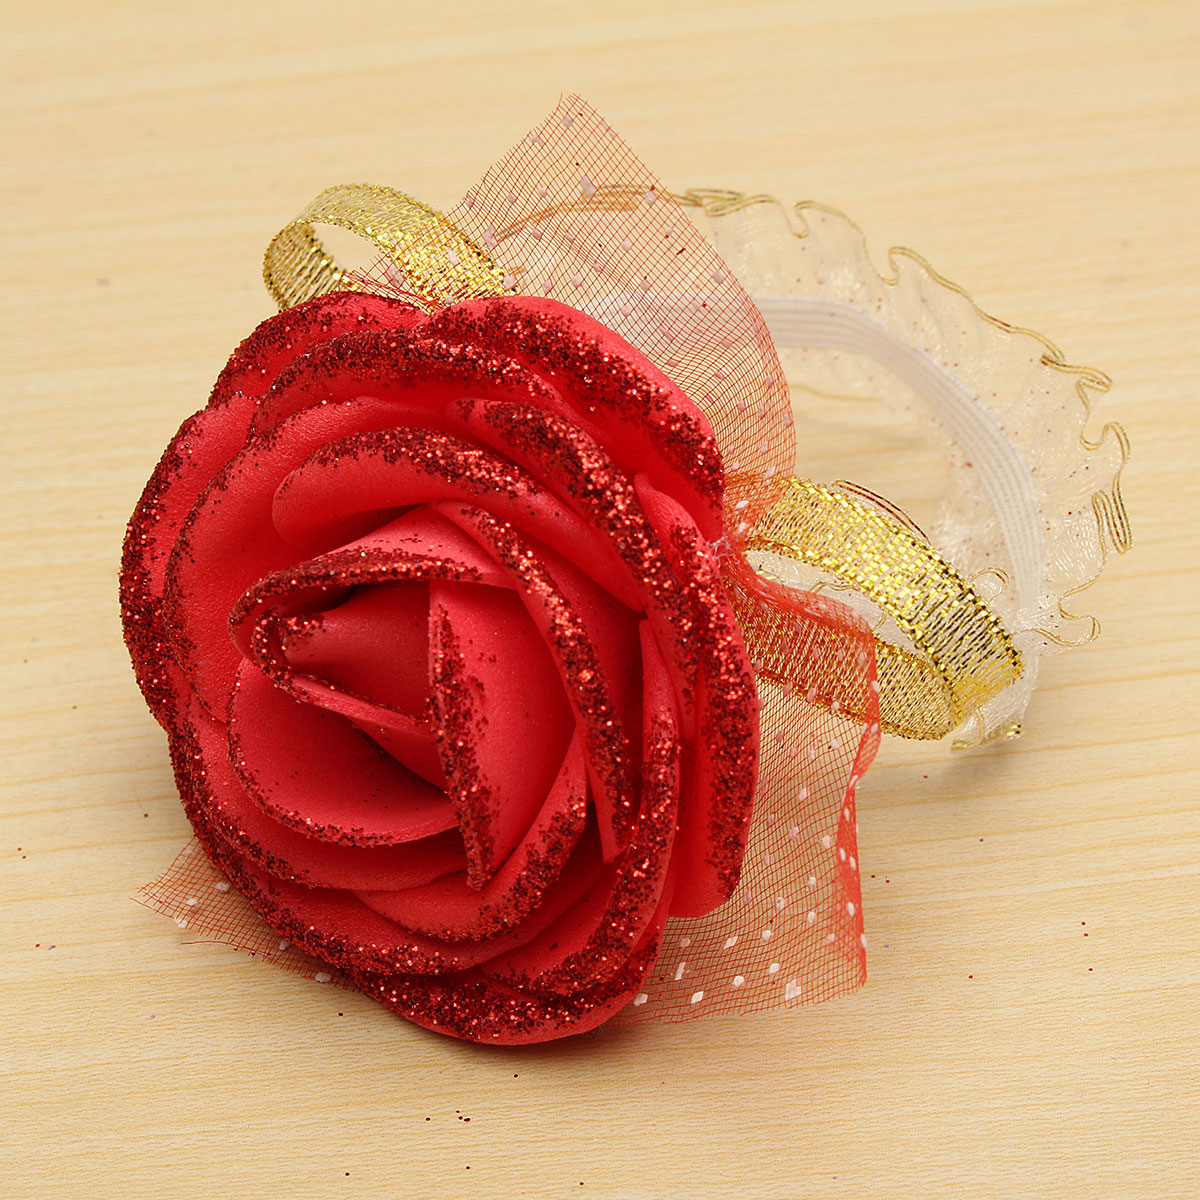 Bridal-Bridesmaid-Foam-Artificial-Rose-Flower-Elastic-Band-Wrist-Corsage-Wedding-Party-Supplies-1049219